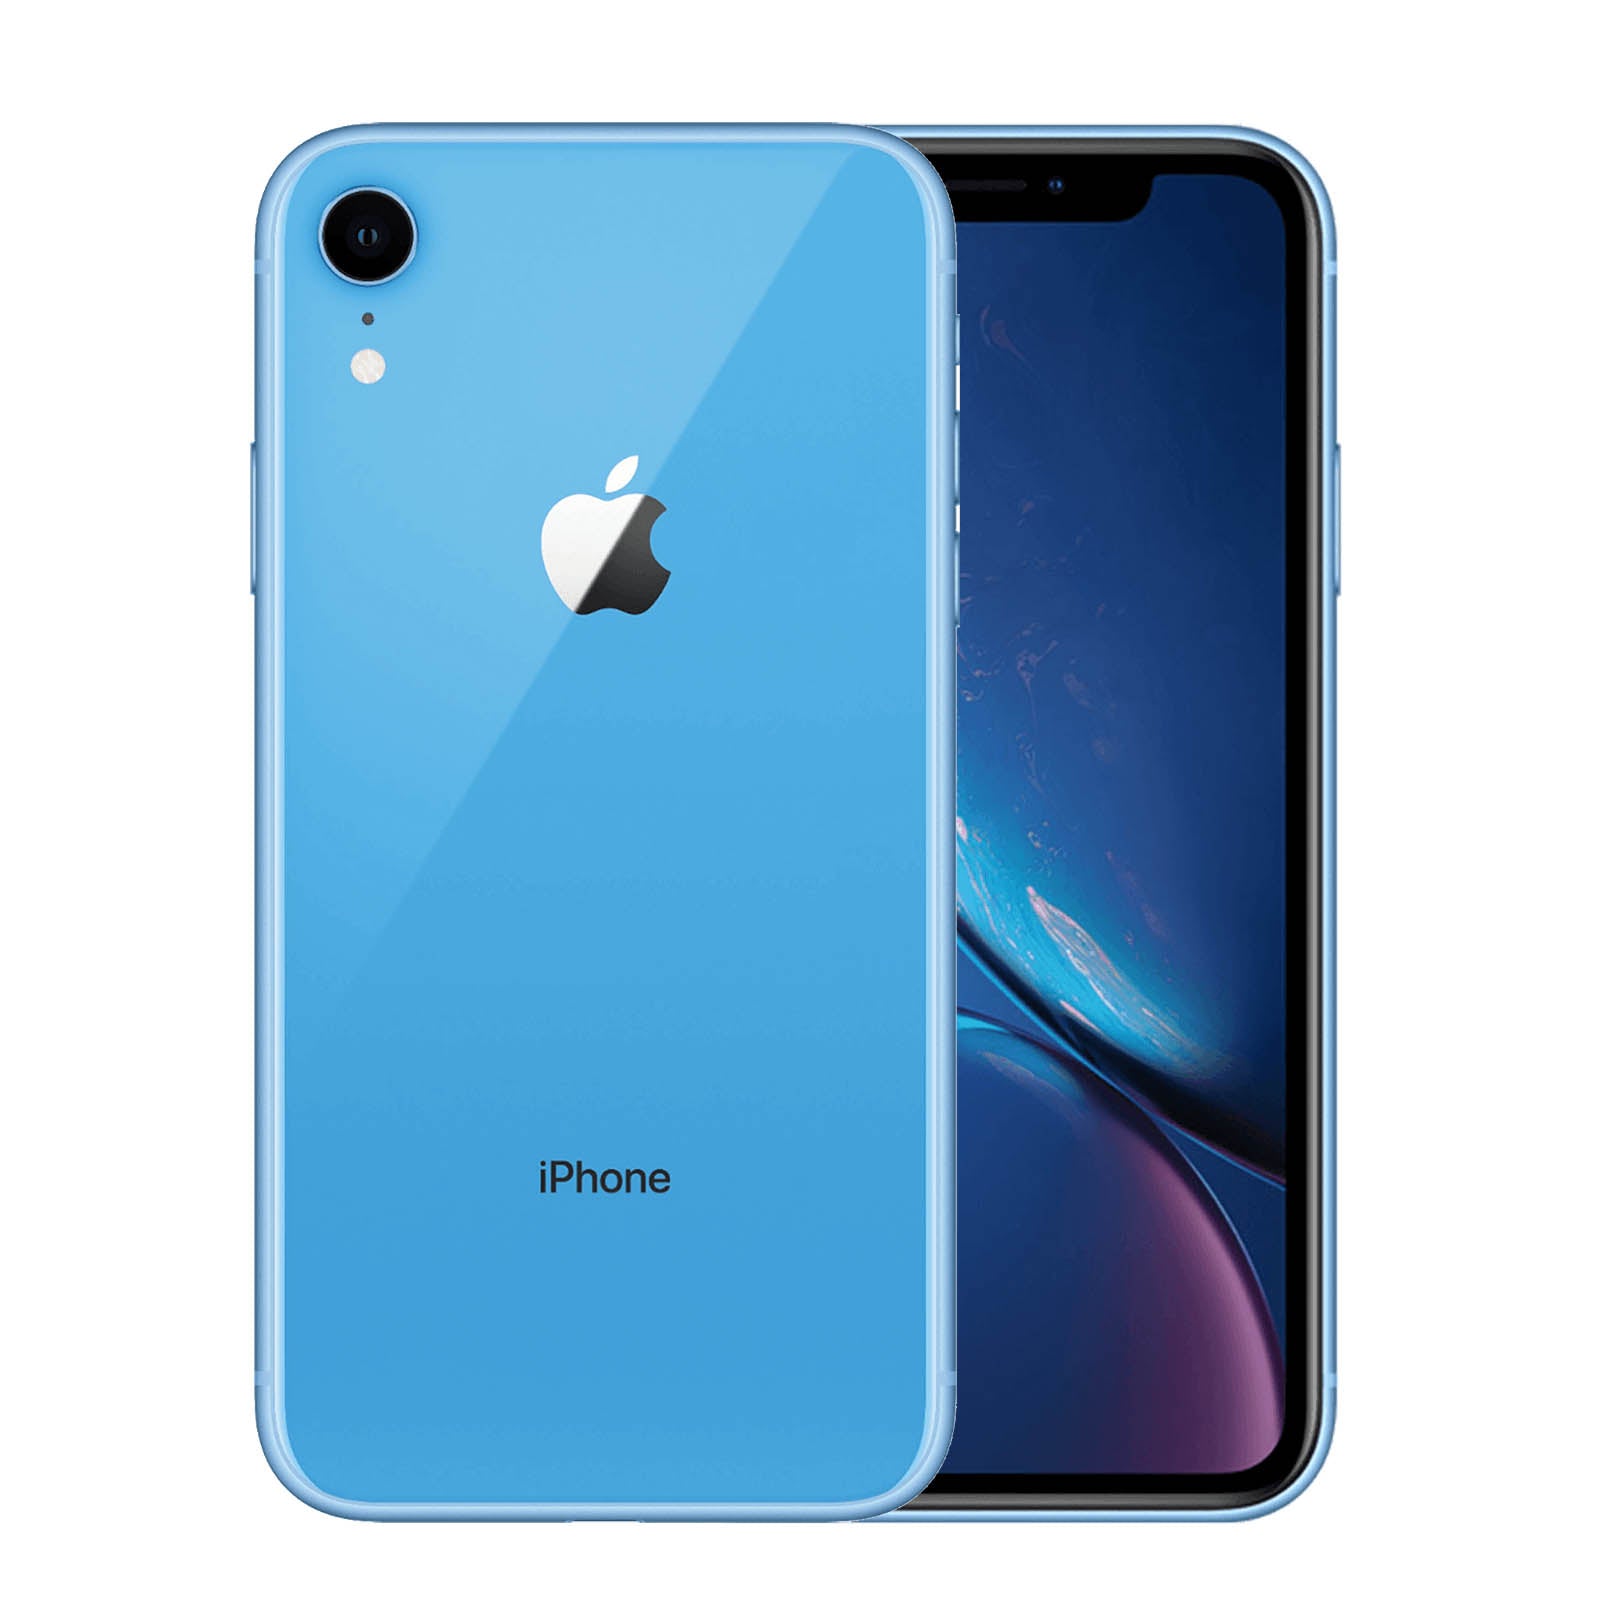 Apple iPhone XR 64GB Blue Very Good - Unlocked